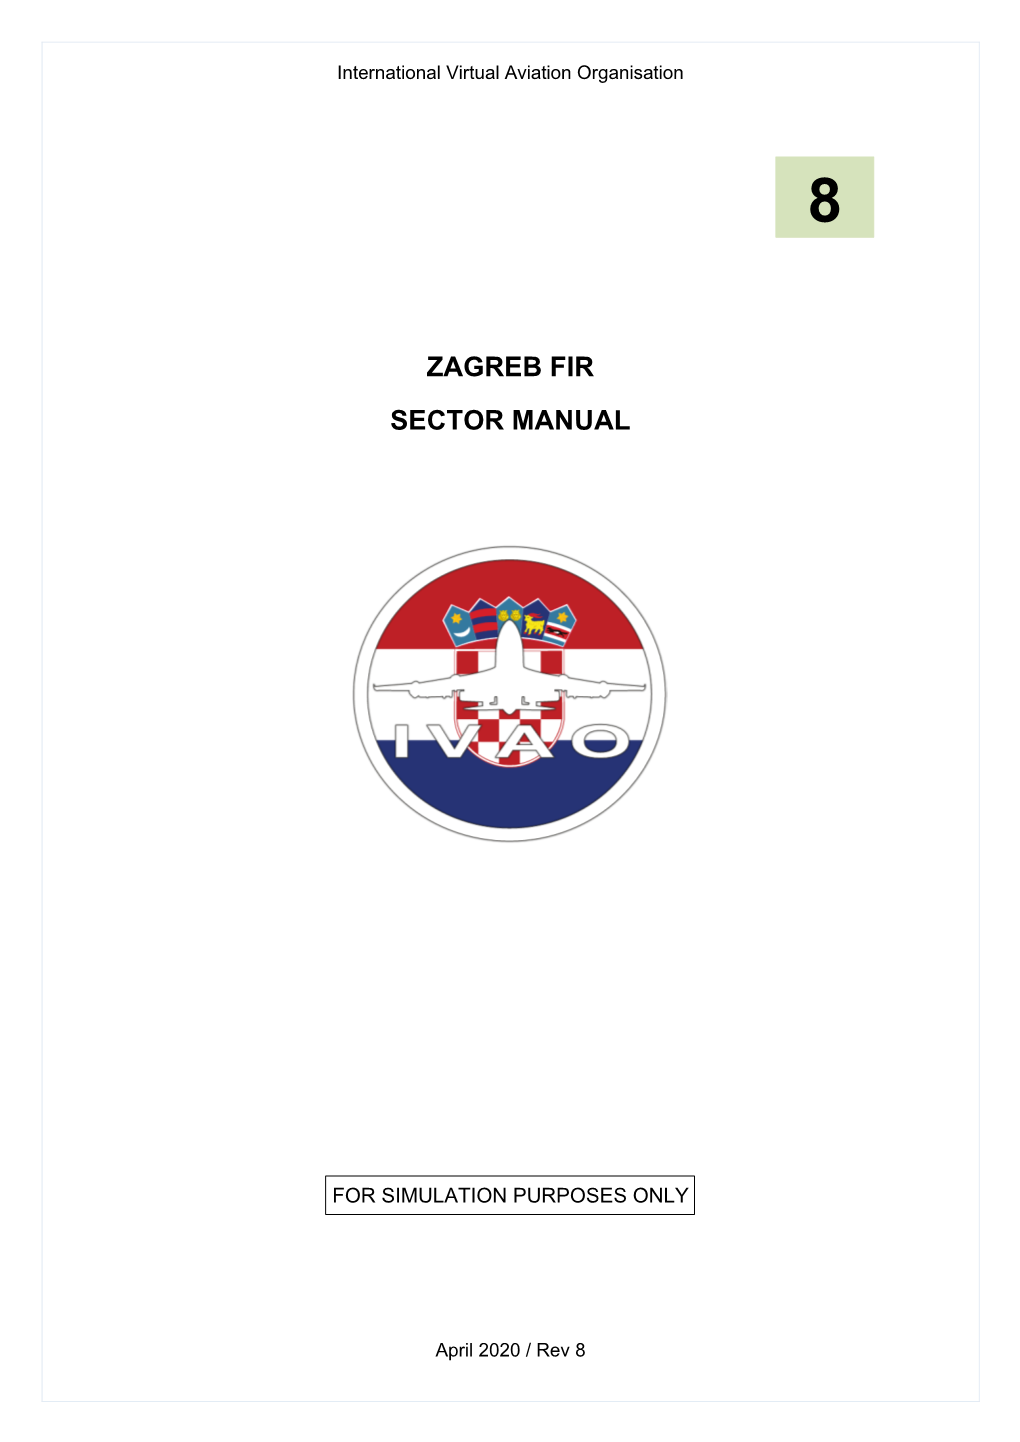 Zagreb Fir Sector Manual